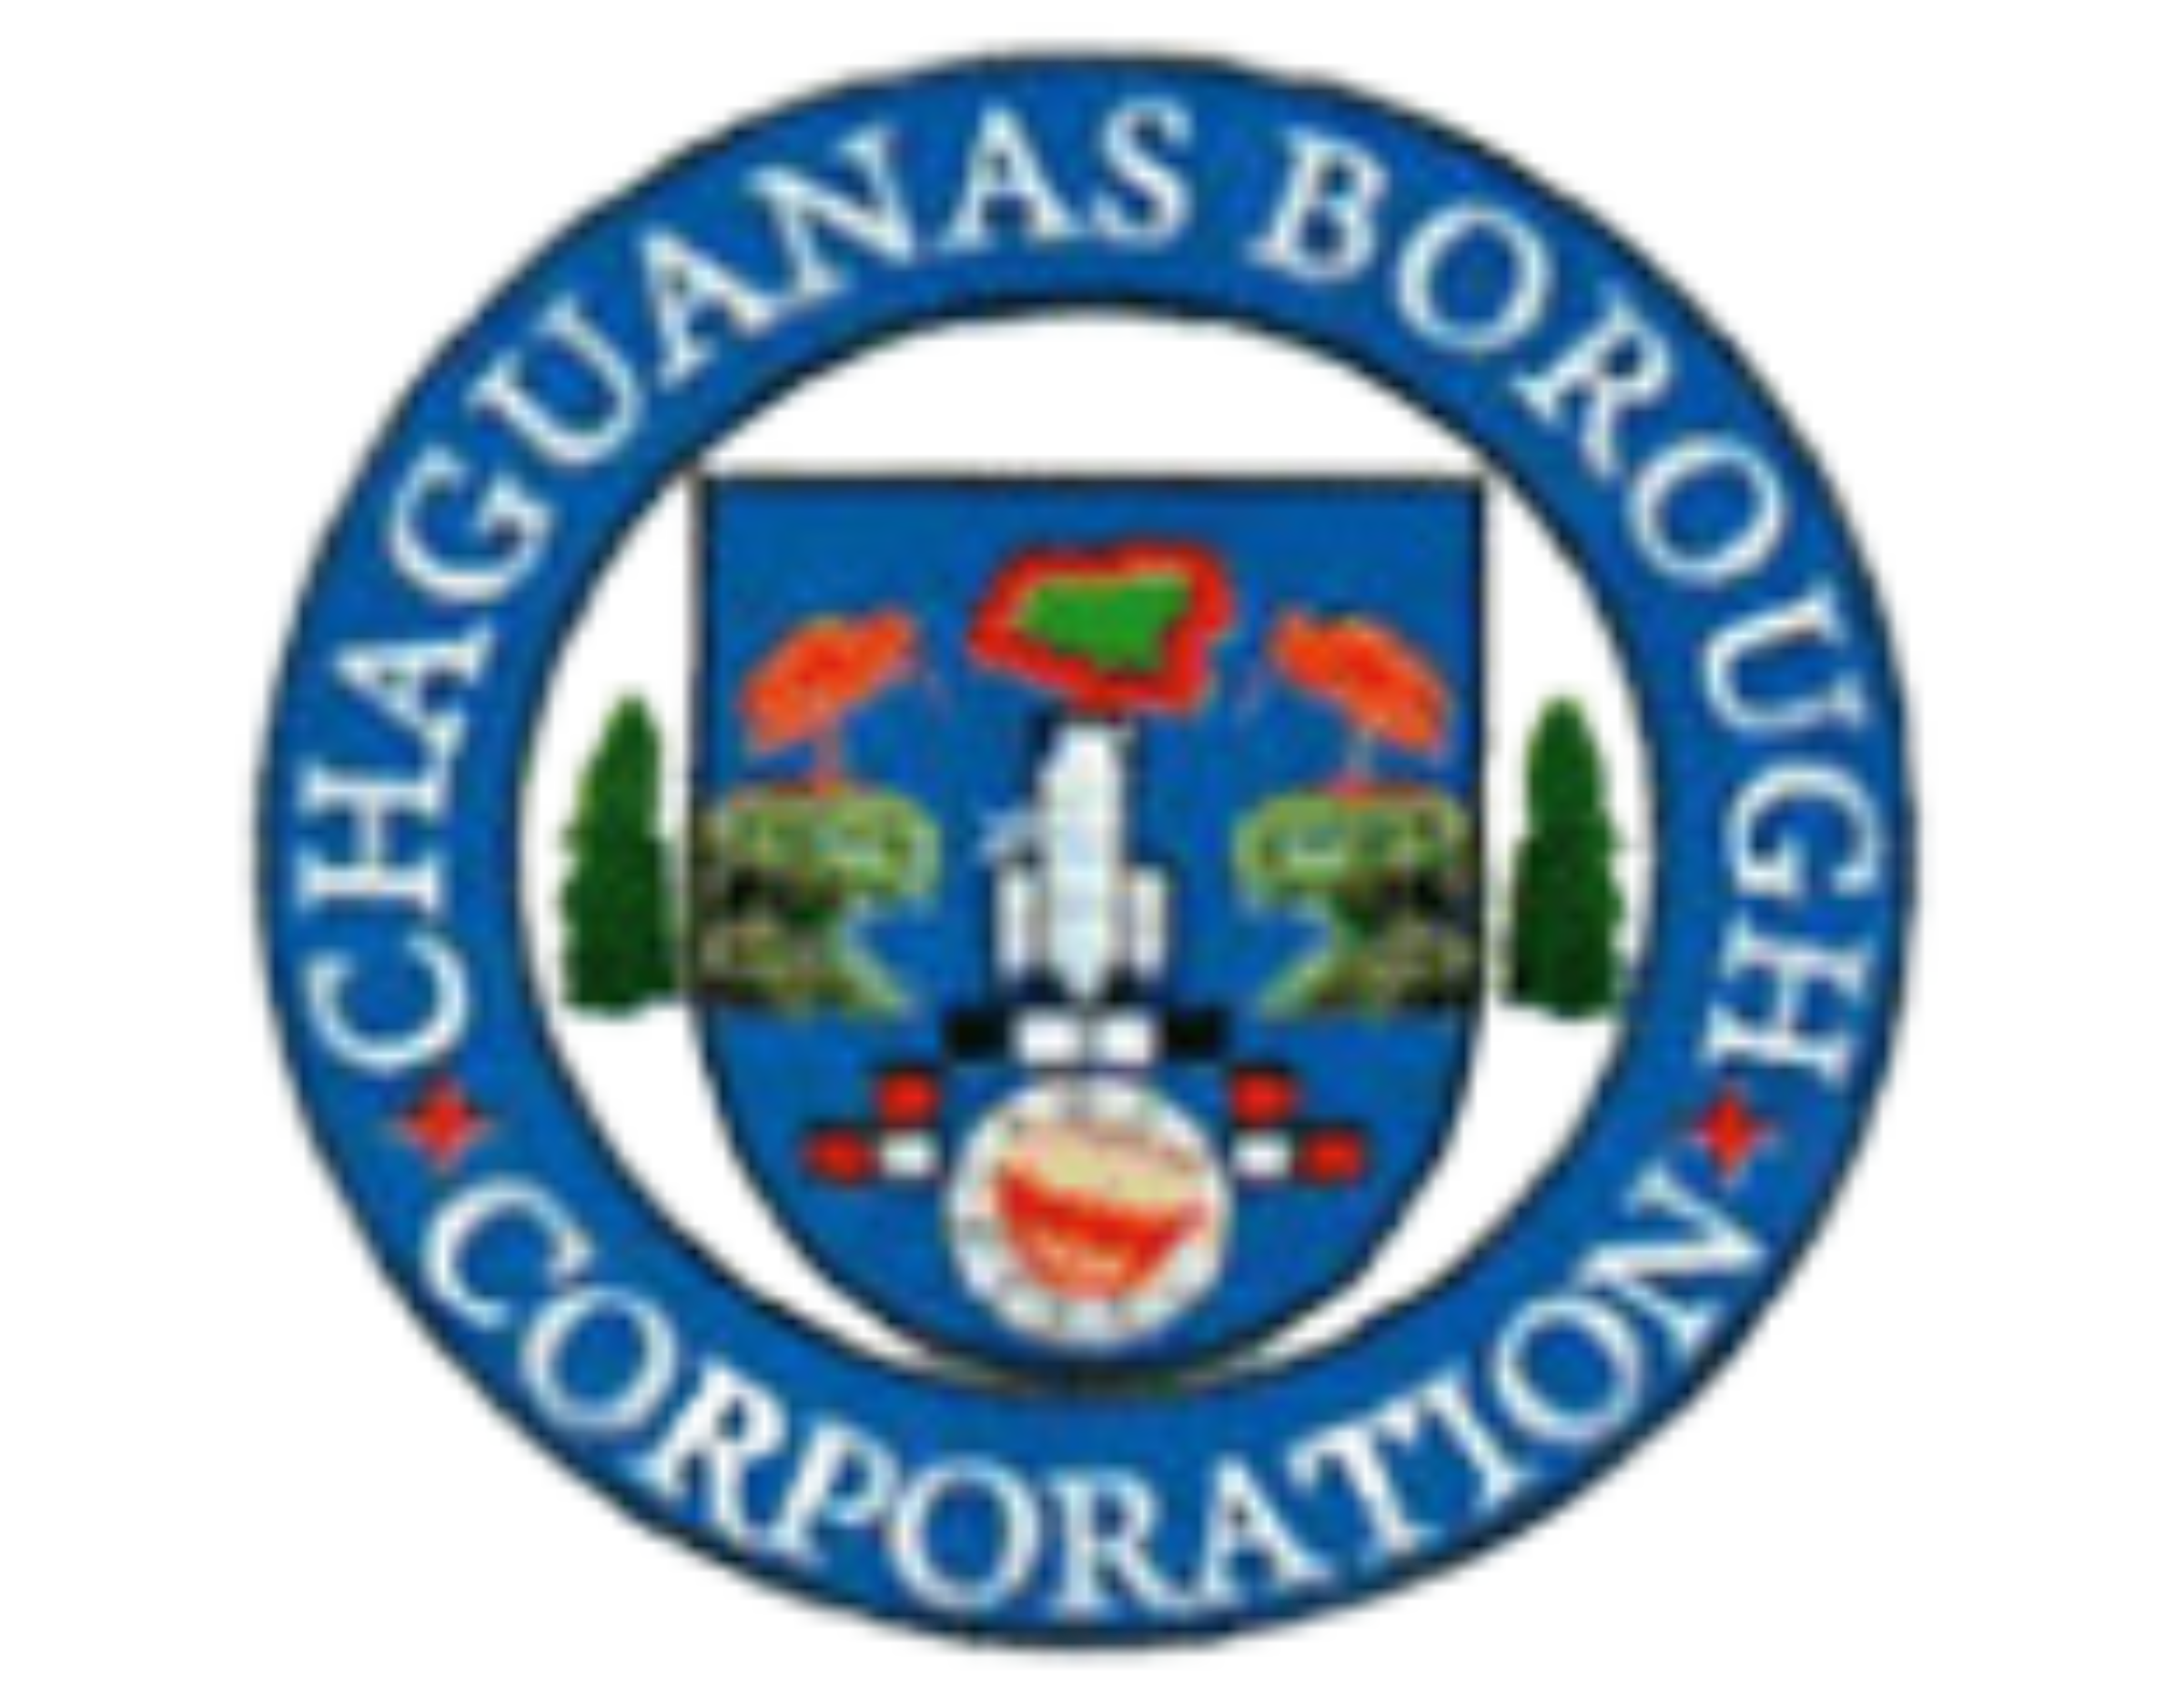 The flag of Chaguanas, Trinidad & Tobago